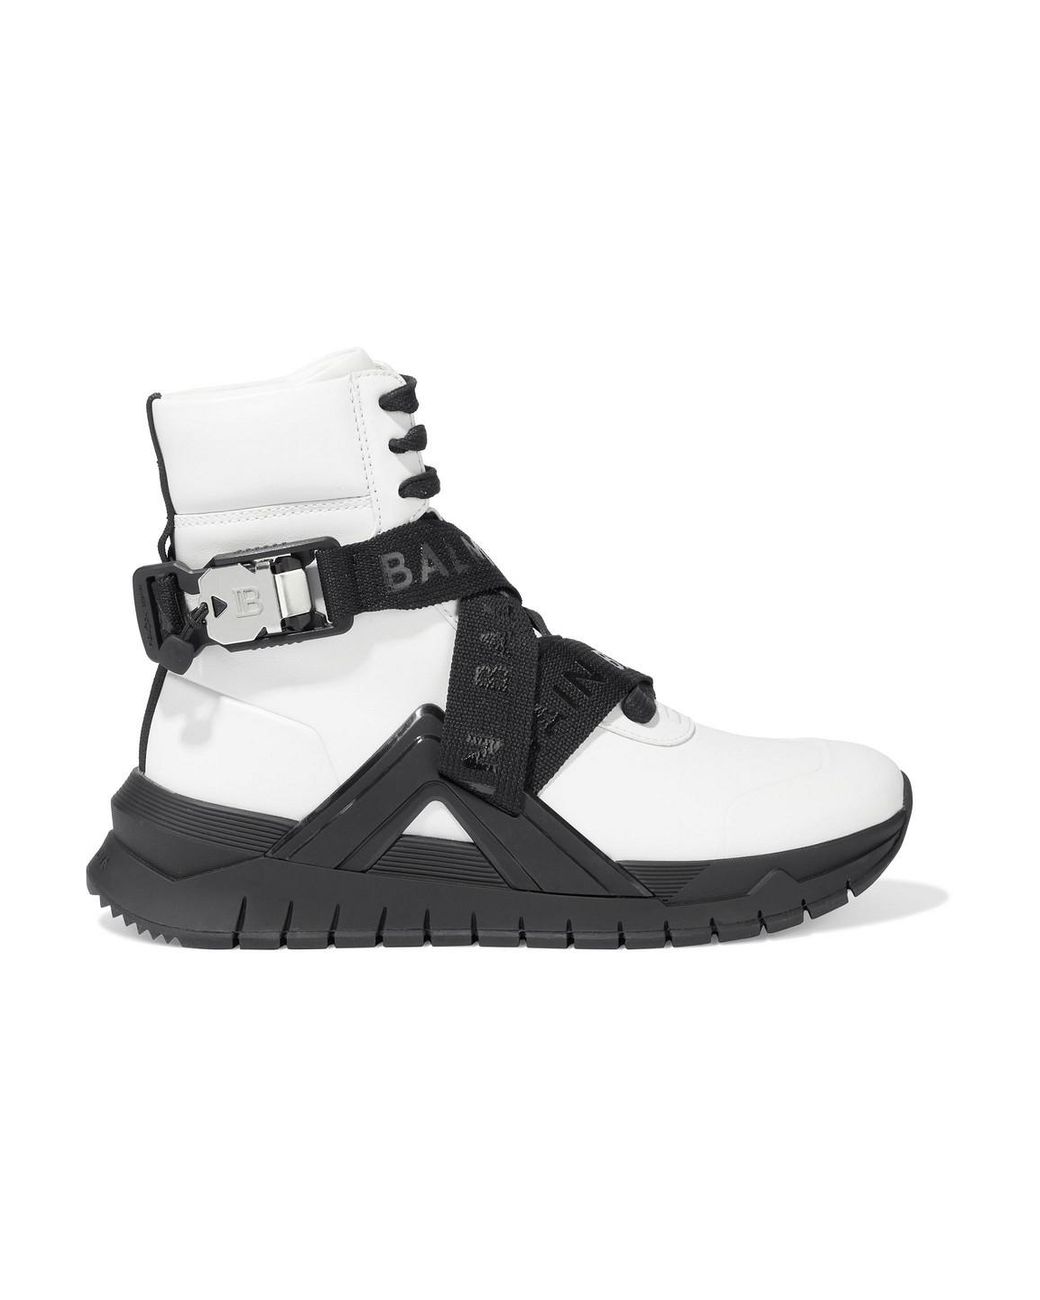 Balmain B Troop Leather High-top Sneakers in White | Lyst